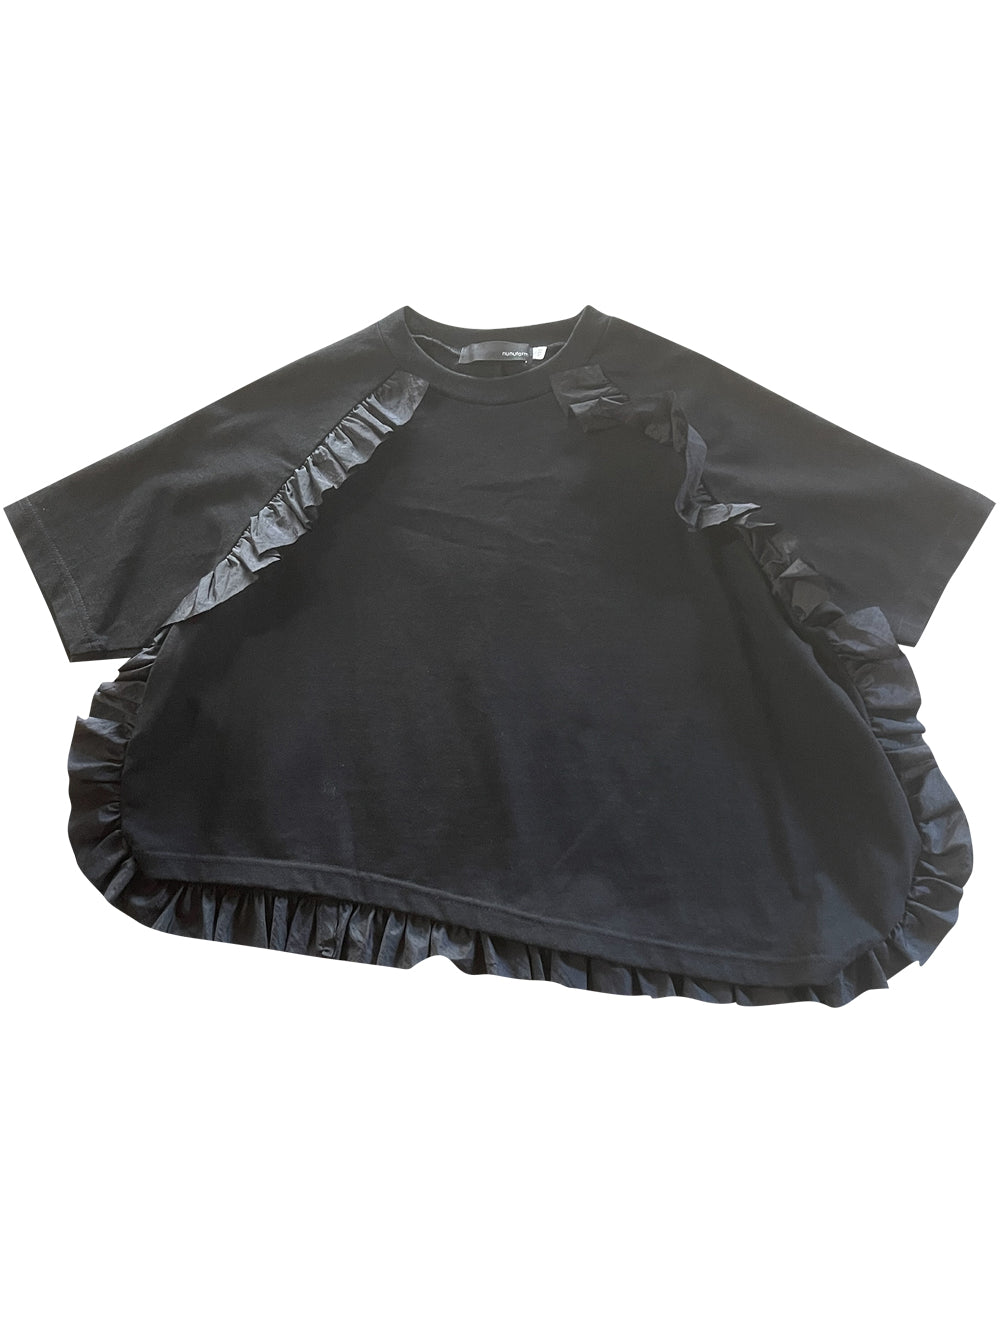 Black  Ruffled Edge T-Shirt